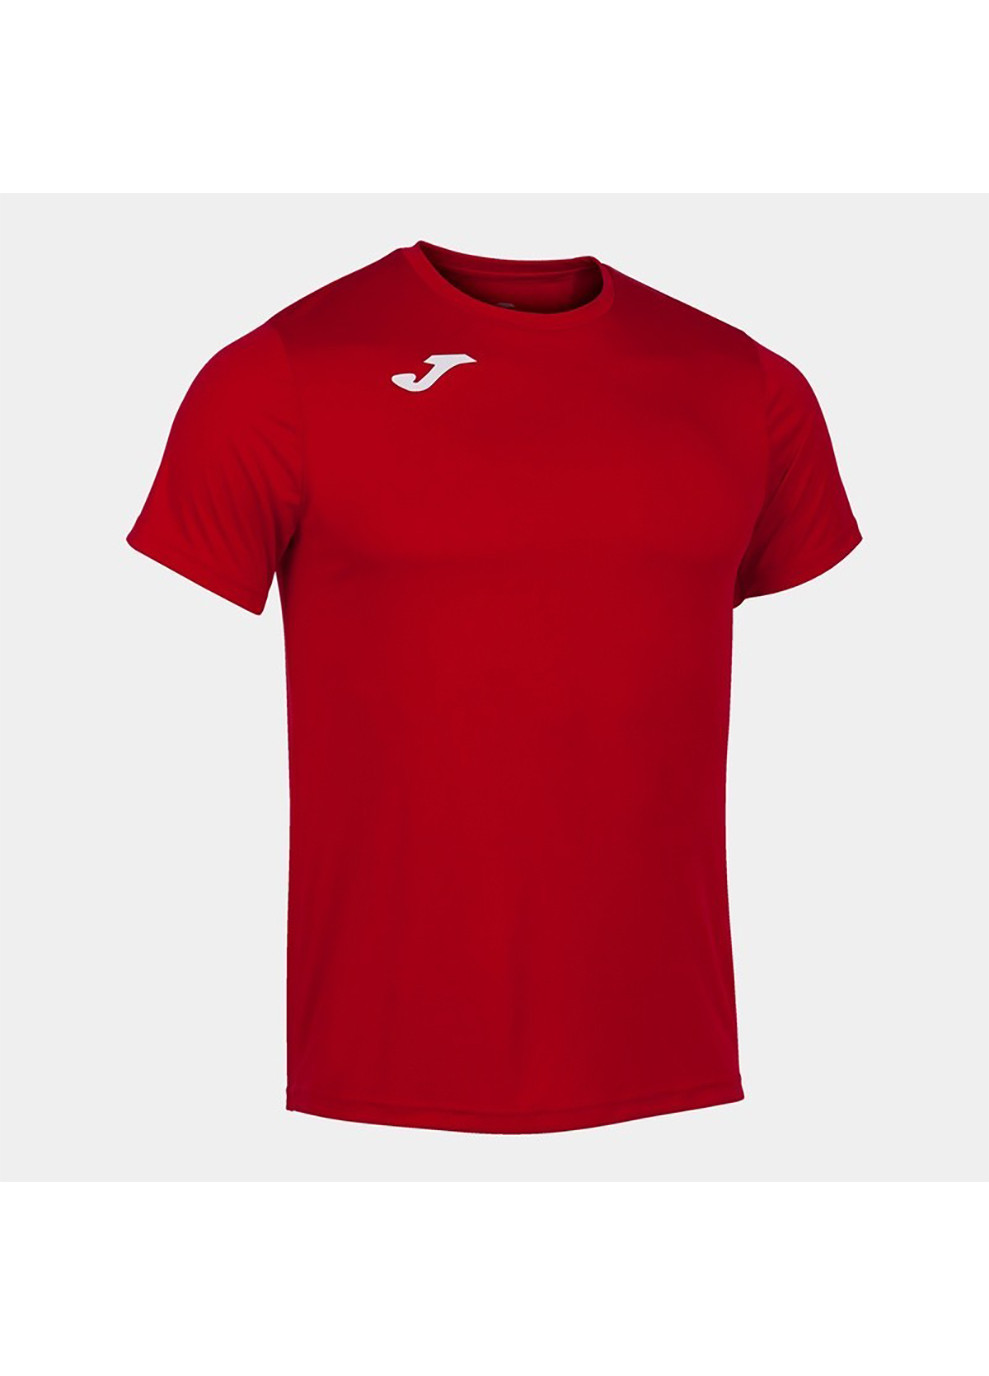 Красная футболка record ii short sleeve t-shirt красный Joma